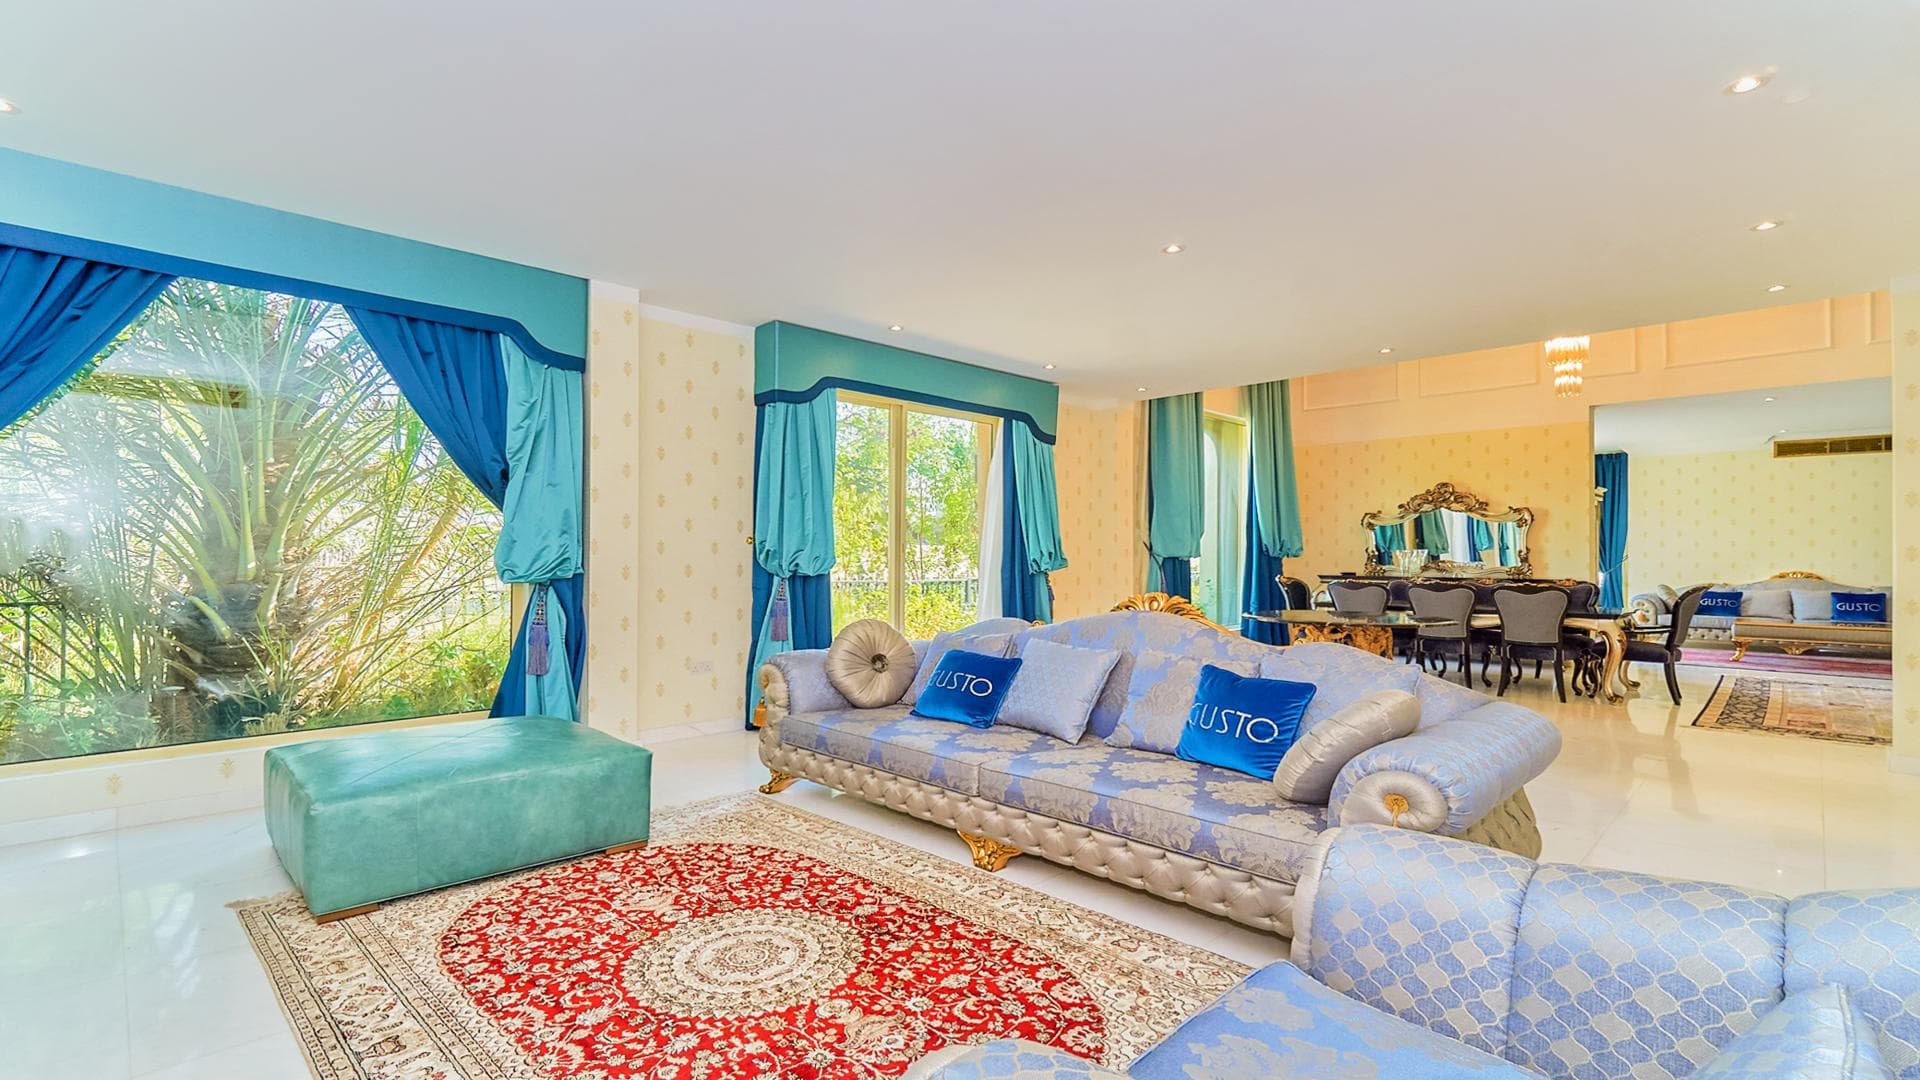 5 Bedroom Villa For Sale Mediterranean Clusters Lp12709 18a491689a2c0d00.jpg